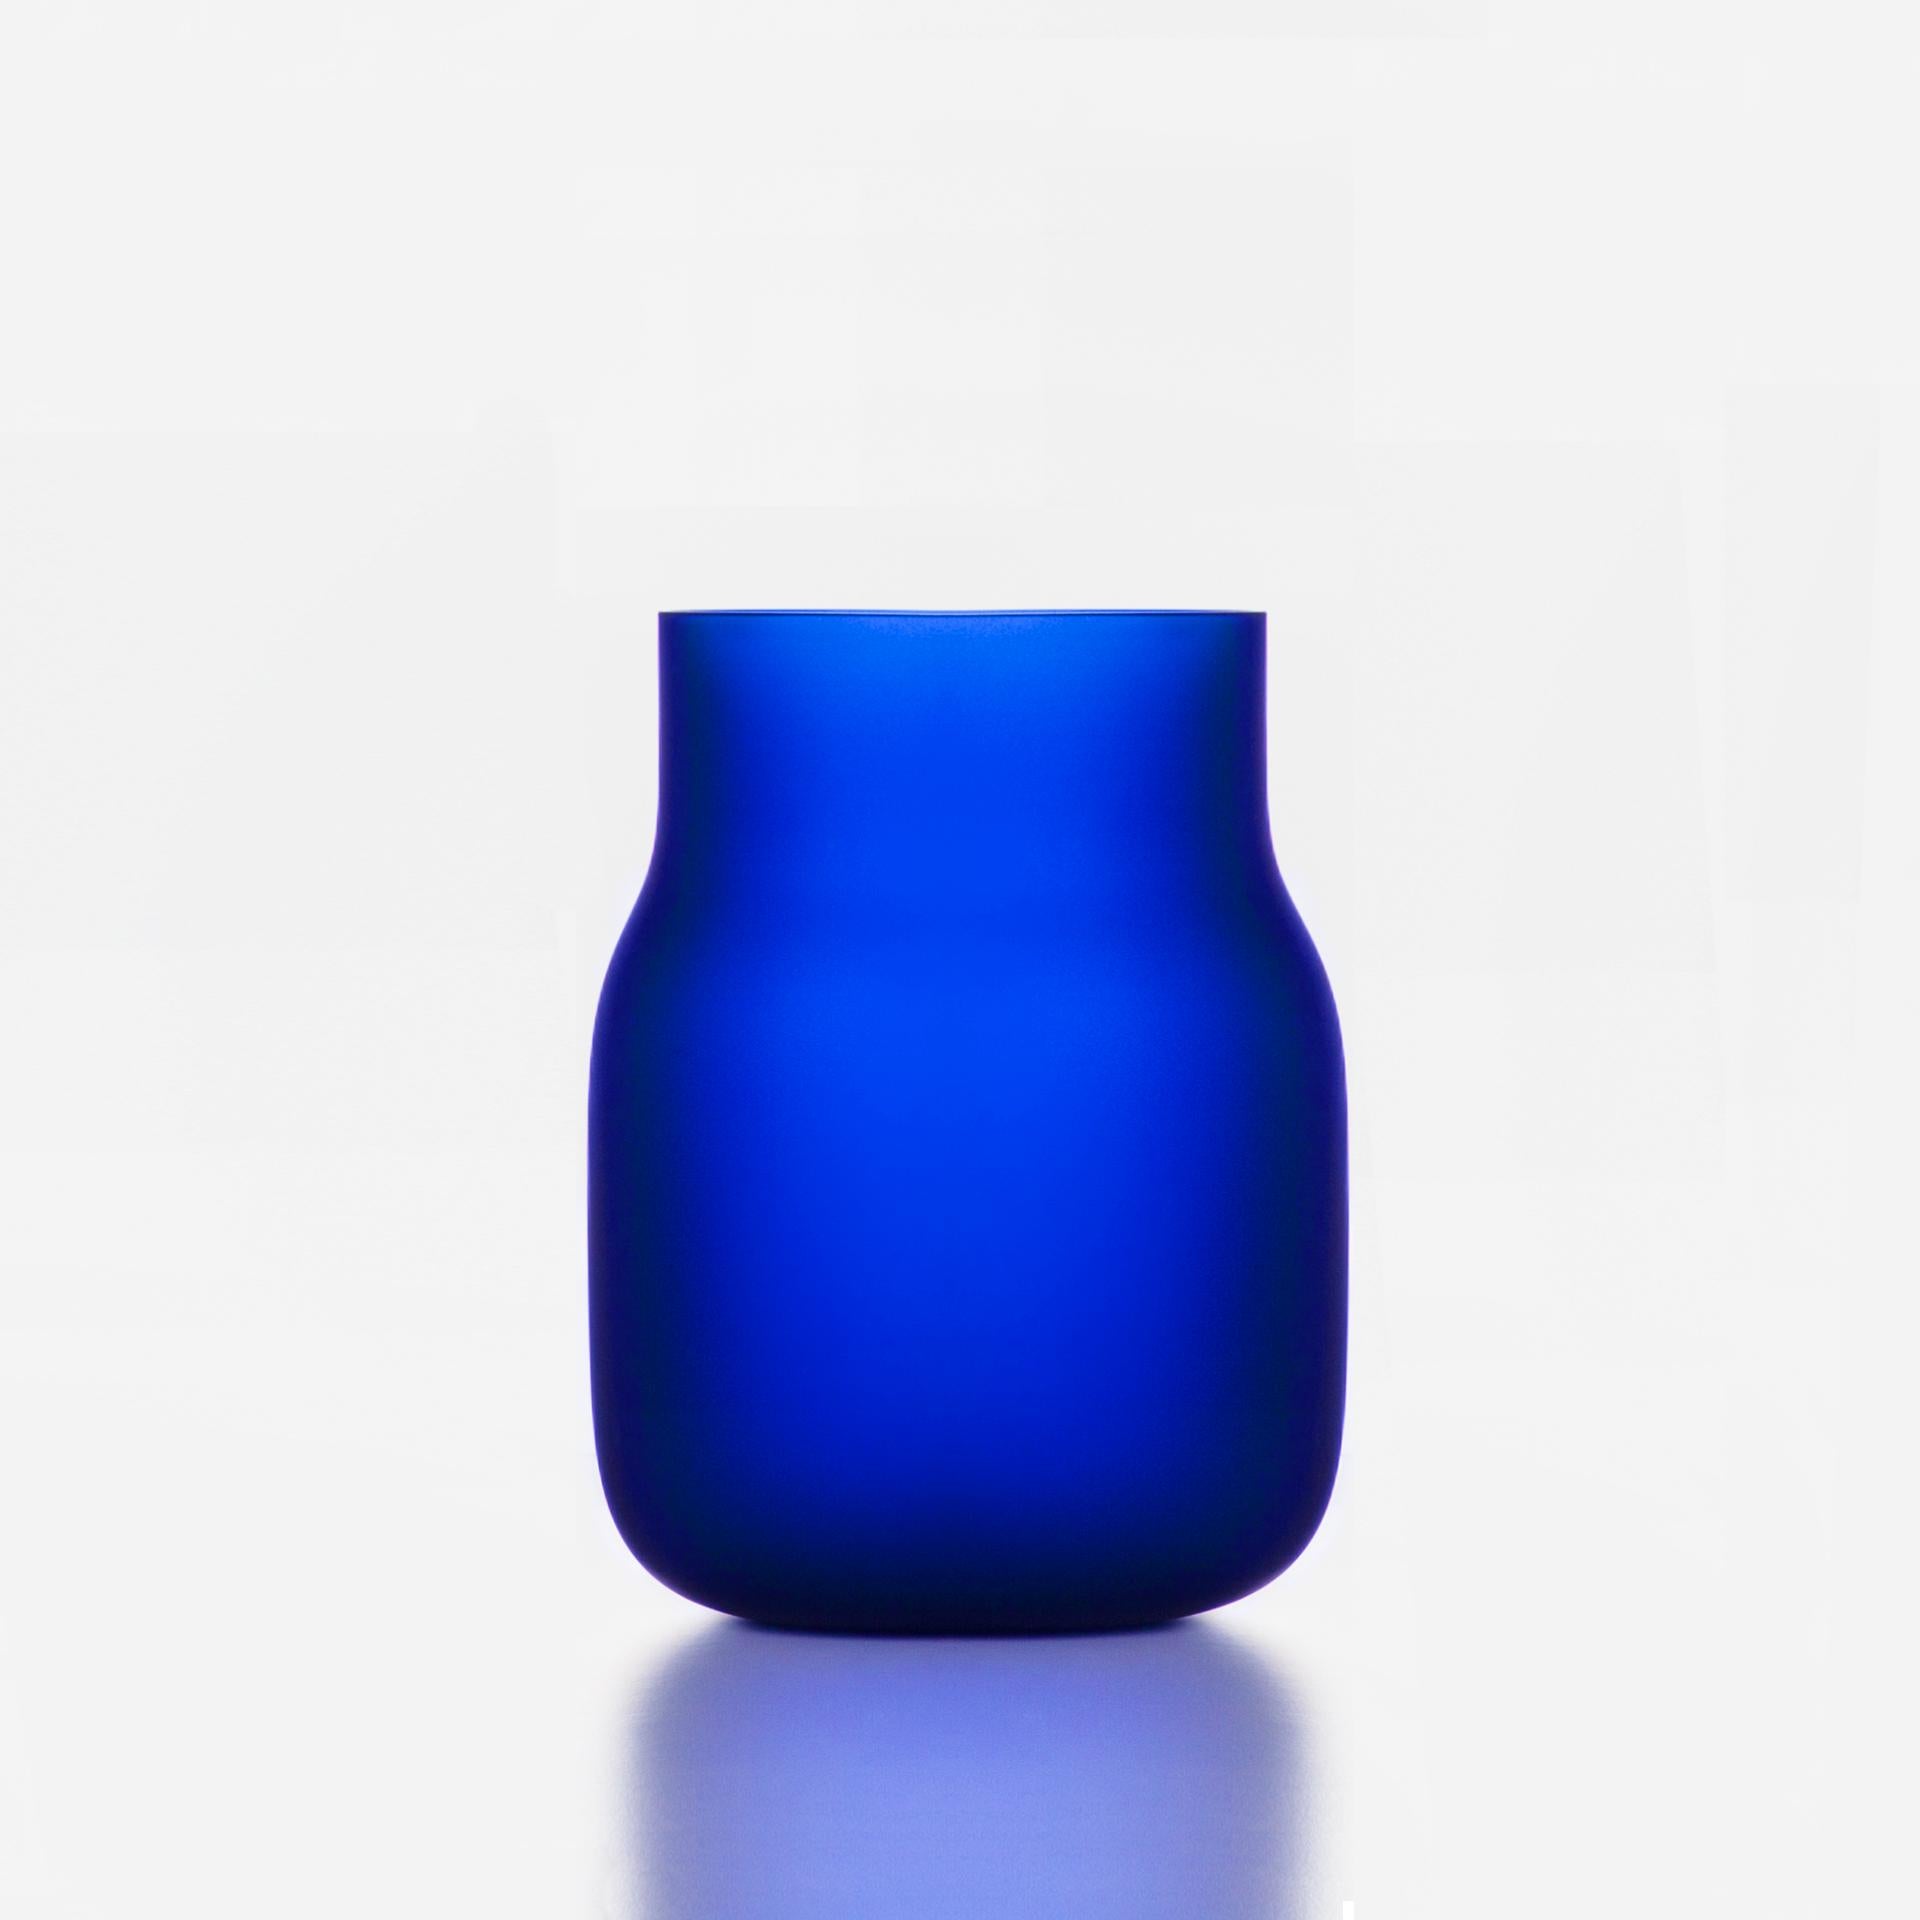 Big Blue Bandaska Matte vase by Dechem Studio.
Dimensions: D 18 x H 24 cm.
Materials: glass.
Available in 4 sizes: D15 x H25/ D18 x H24/ D9 x W31/ D22 x H33 cm.
Available in black, uranium yellow, dark blue.

hand blown into beechwood mold,